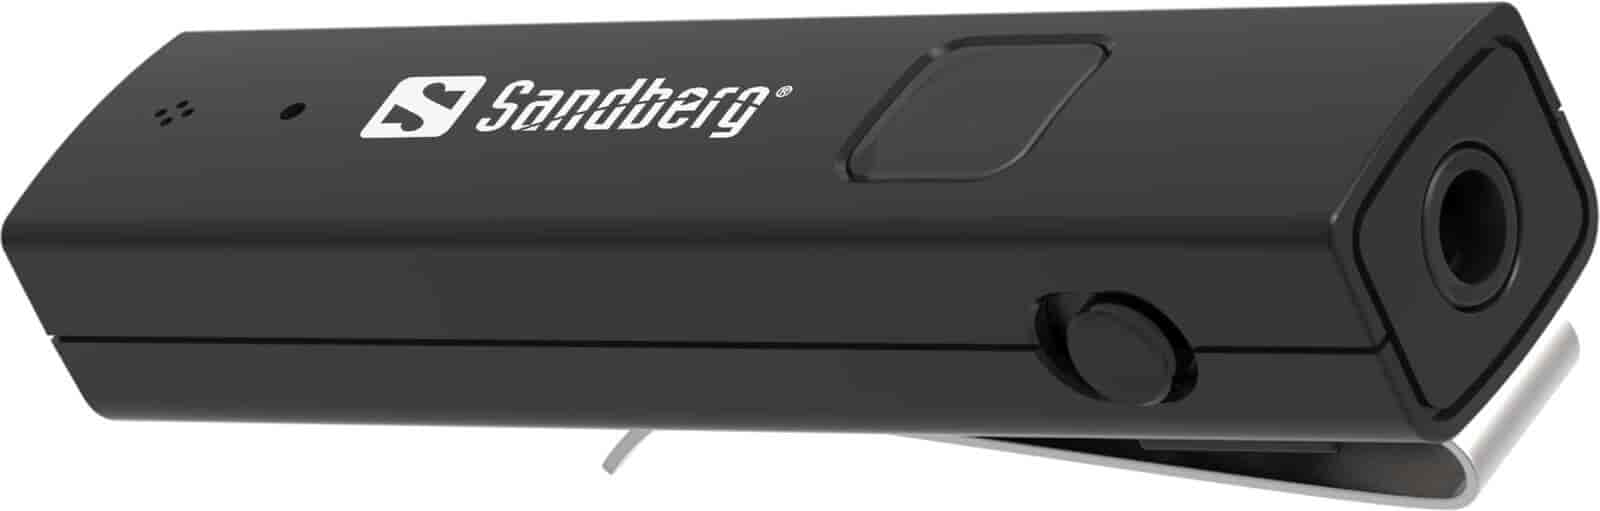 Sandberg Bluetooth audiolink 2in1 - Get Bluetooth on Hi-Fi, Carradio or headset.